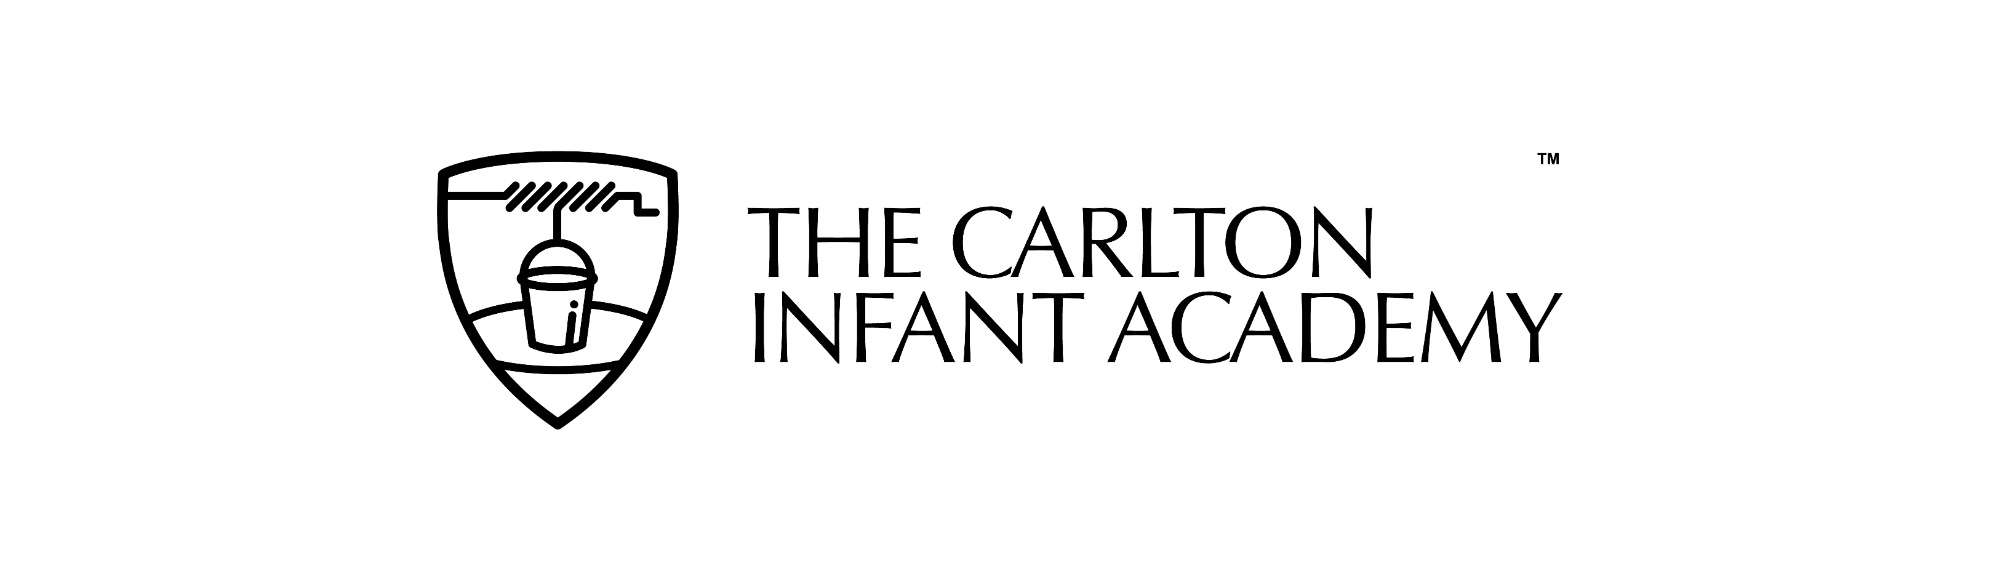 Online - Safety - The Carlton Junior Academy - Nottingham